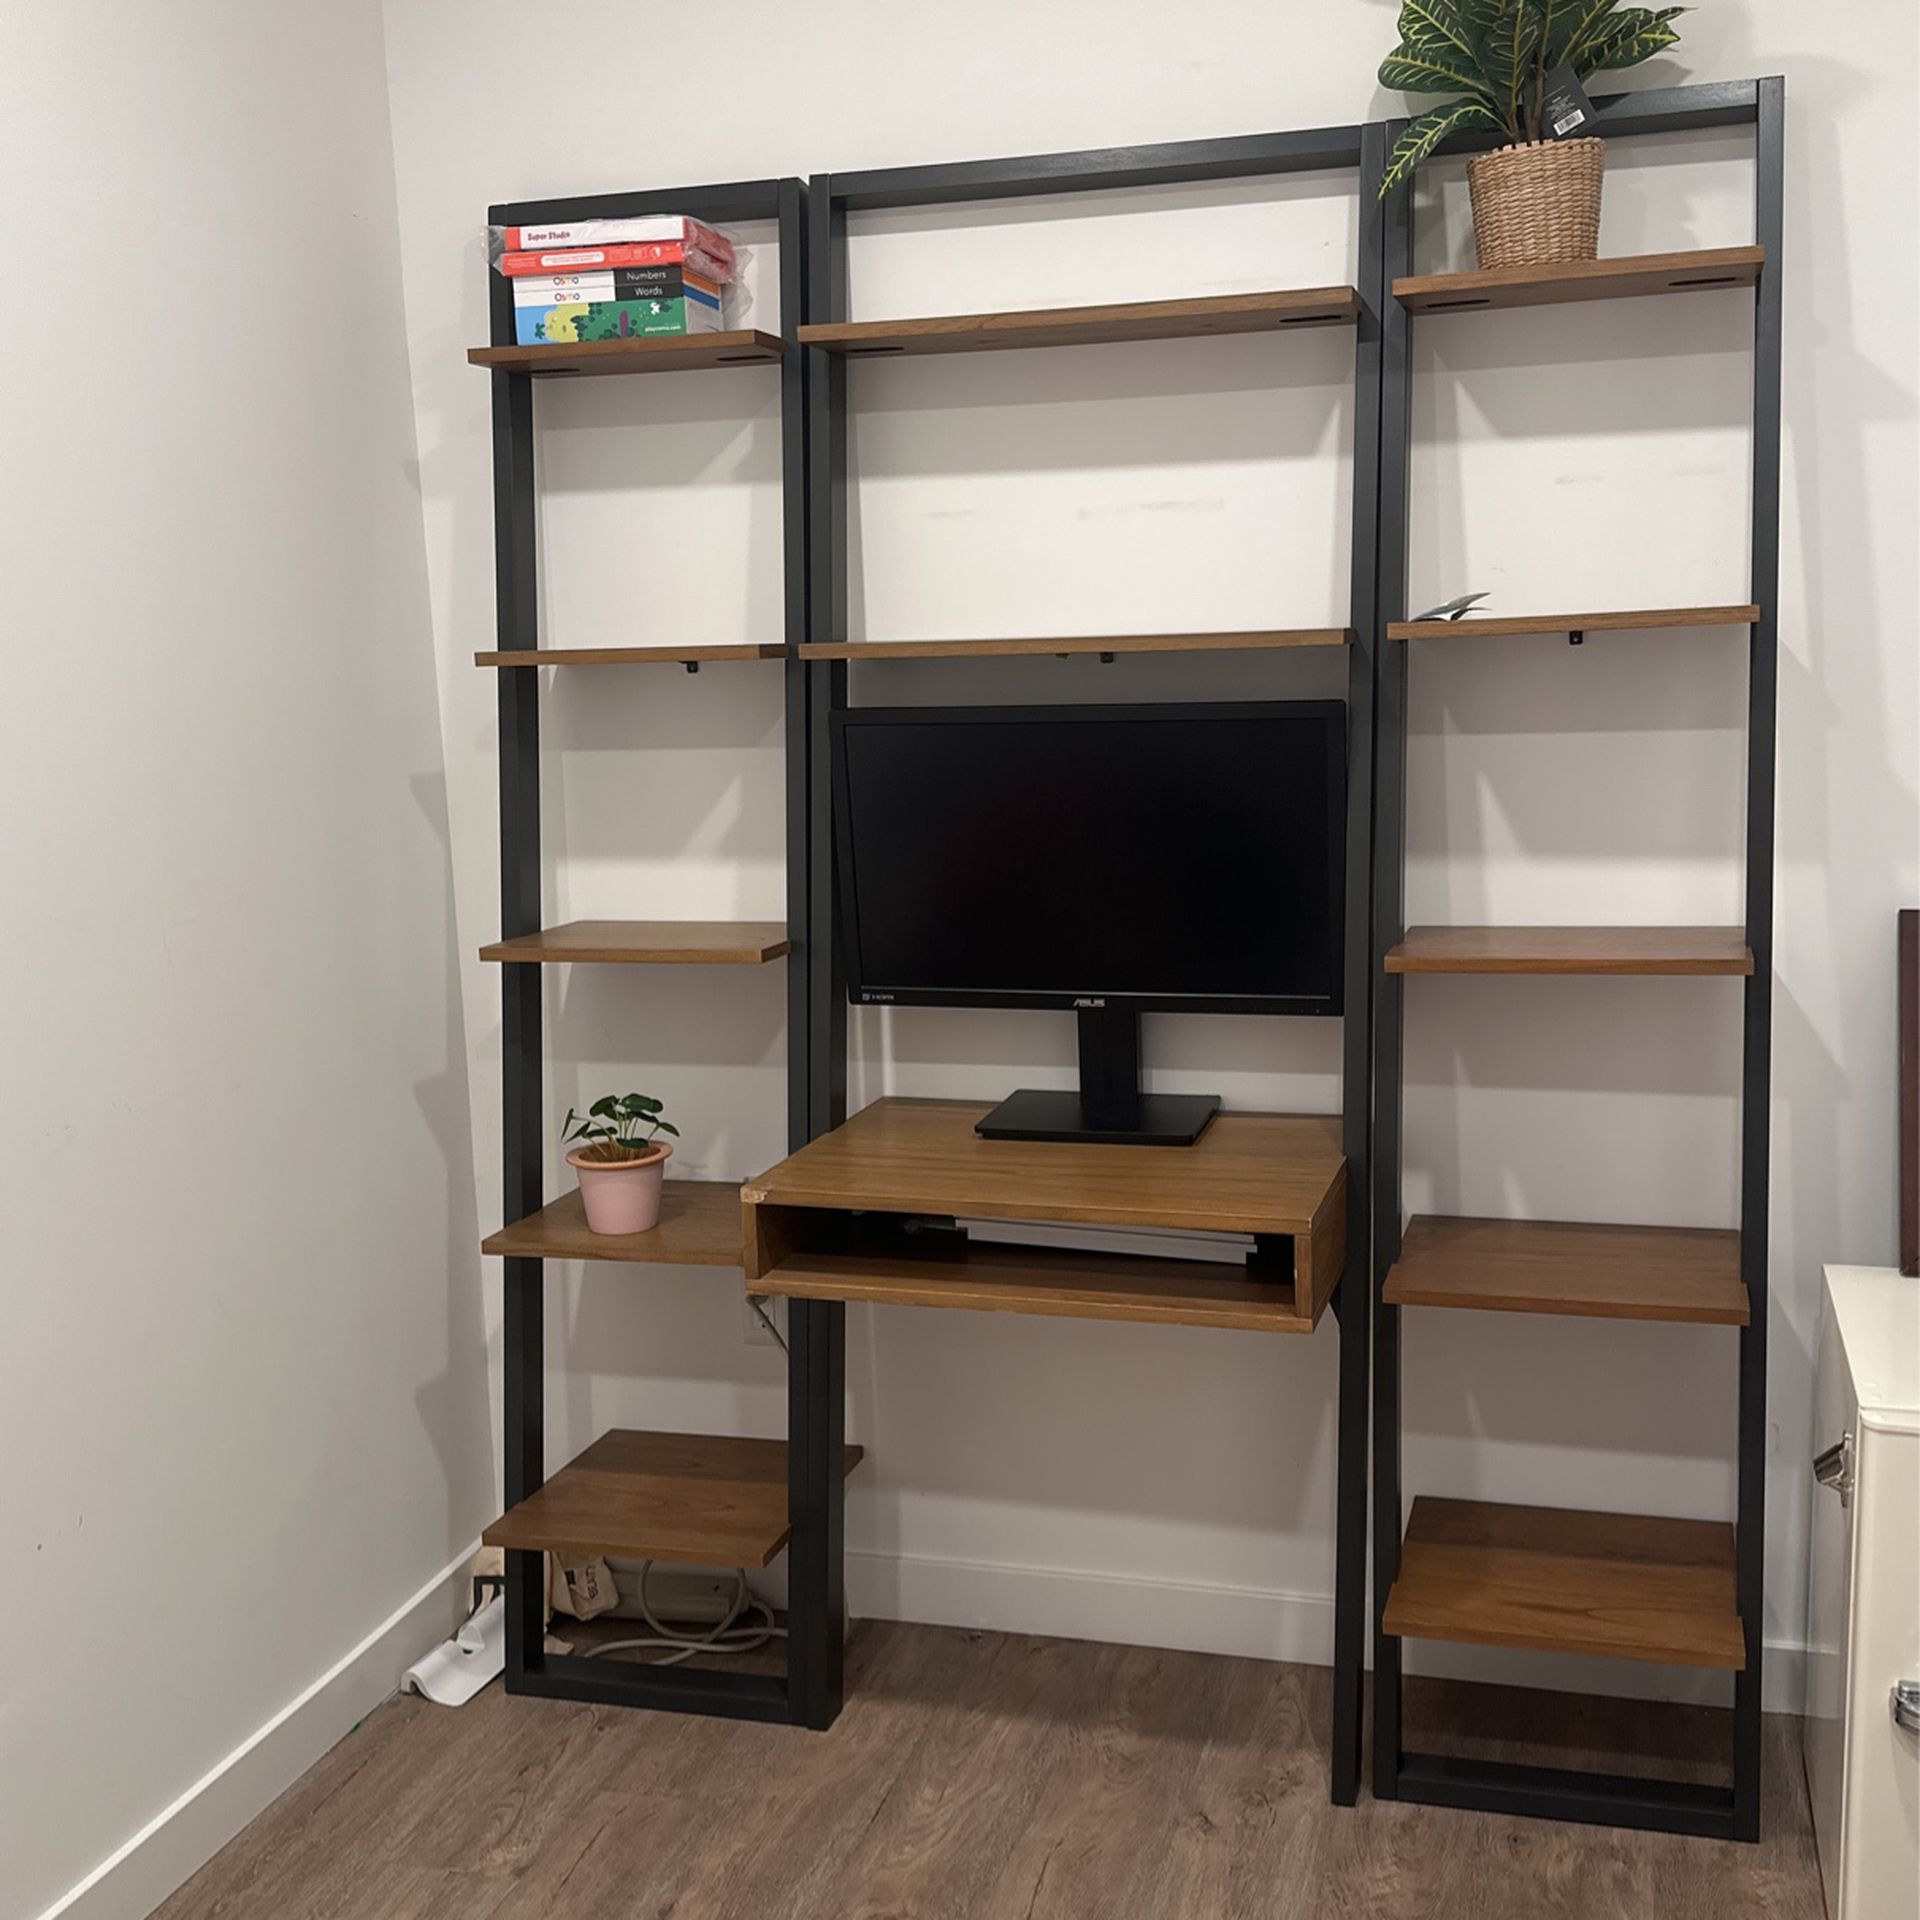 West Elm Ladder Shelf Desk & Narrow Bookshelf Set (63")